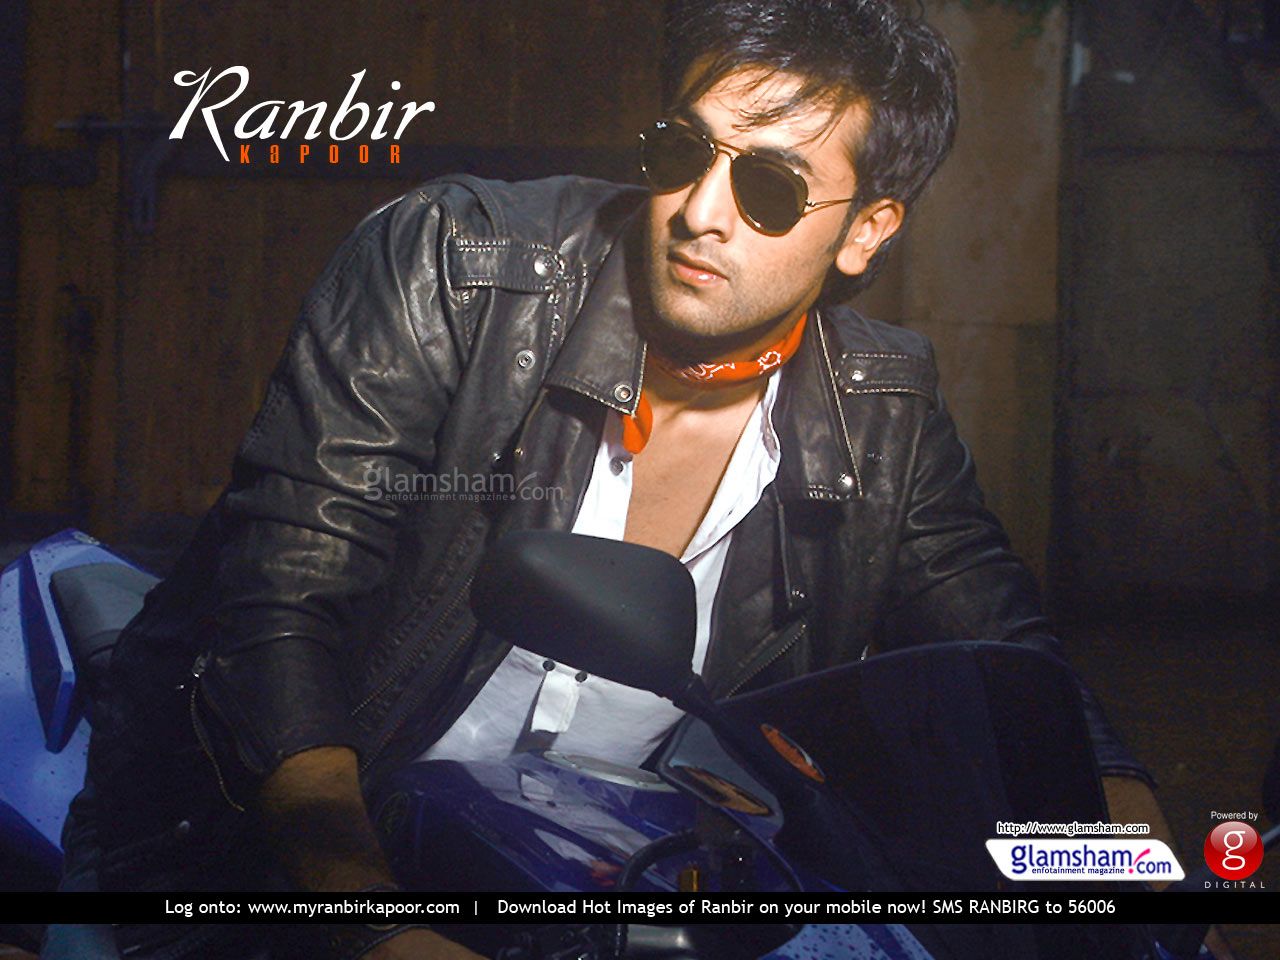 Ranbir Kapoor high resolution image 21904 - Glamsham